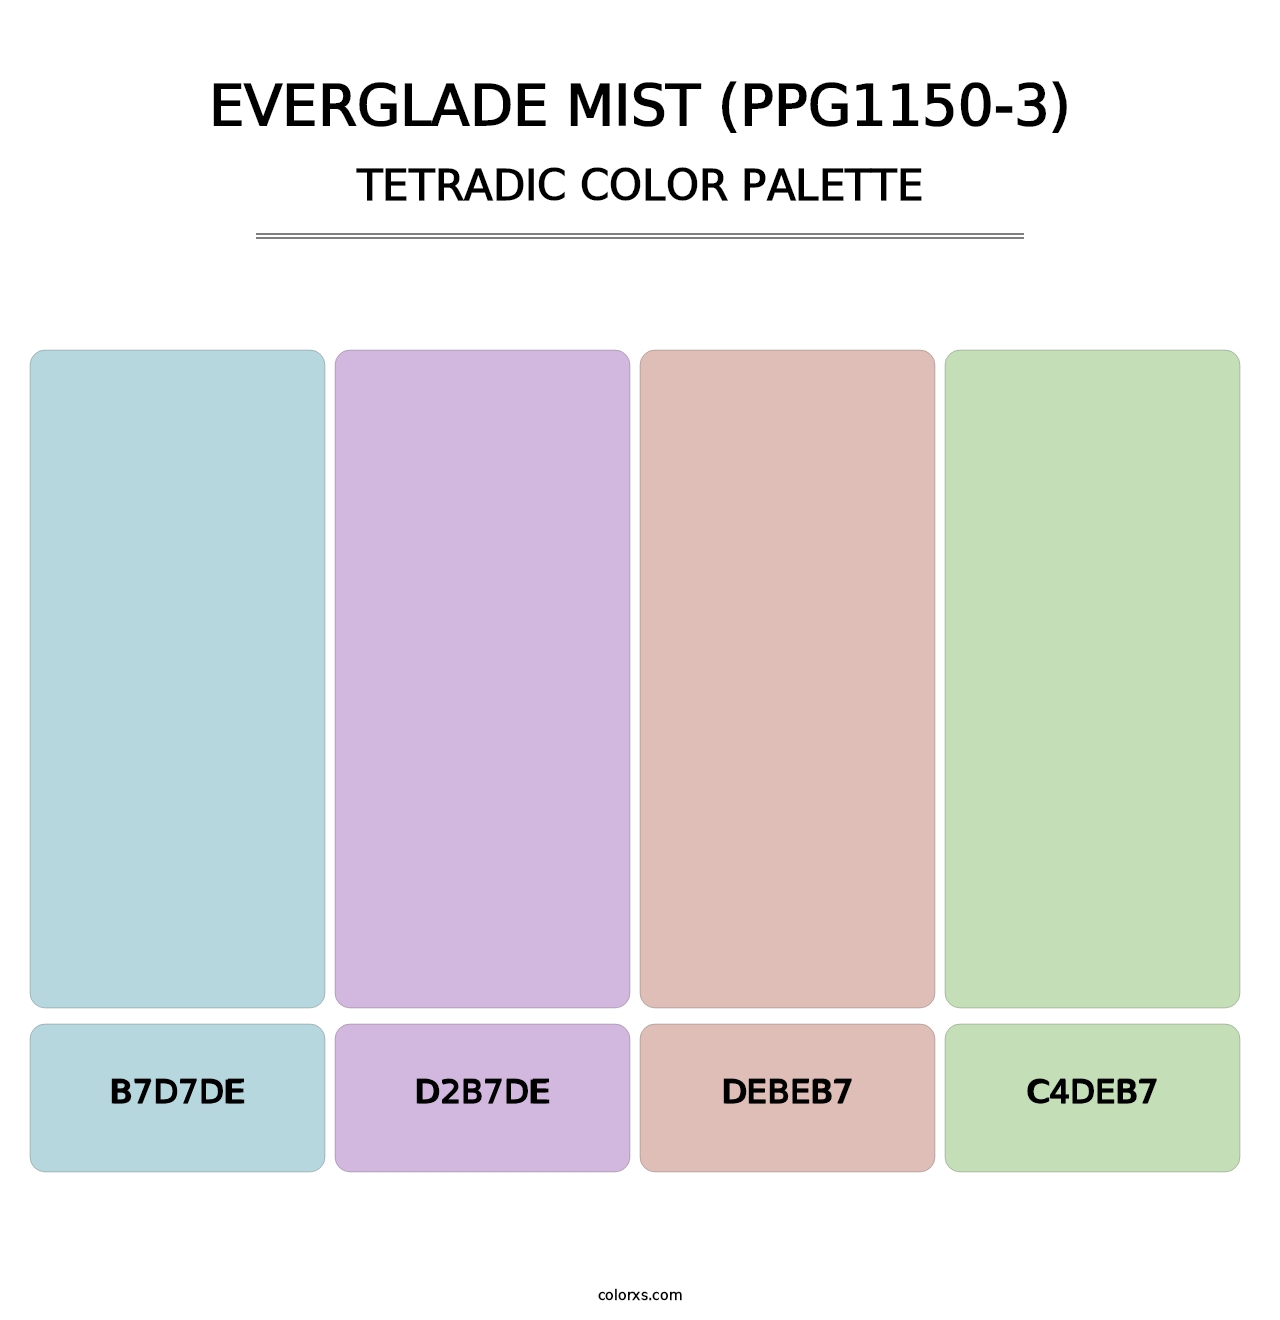 Everglade Mist (PPG1150-3) - Tetradic Color Palette